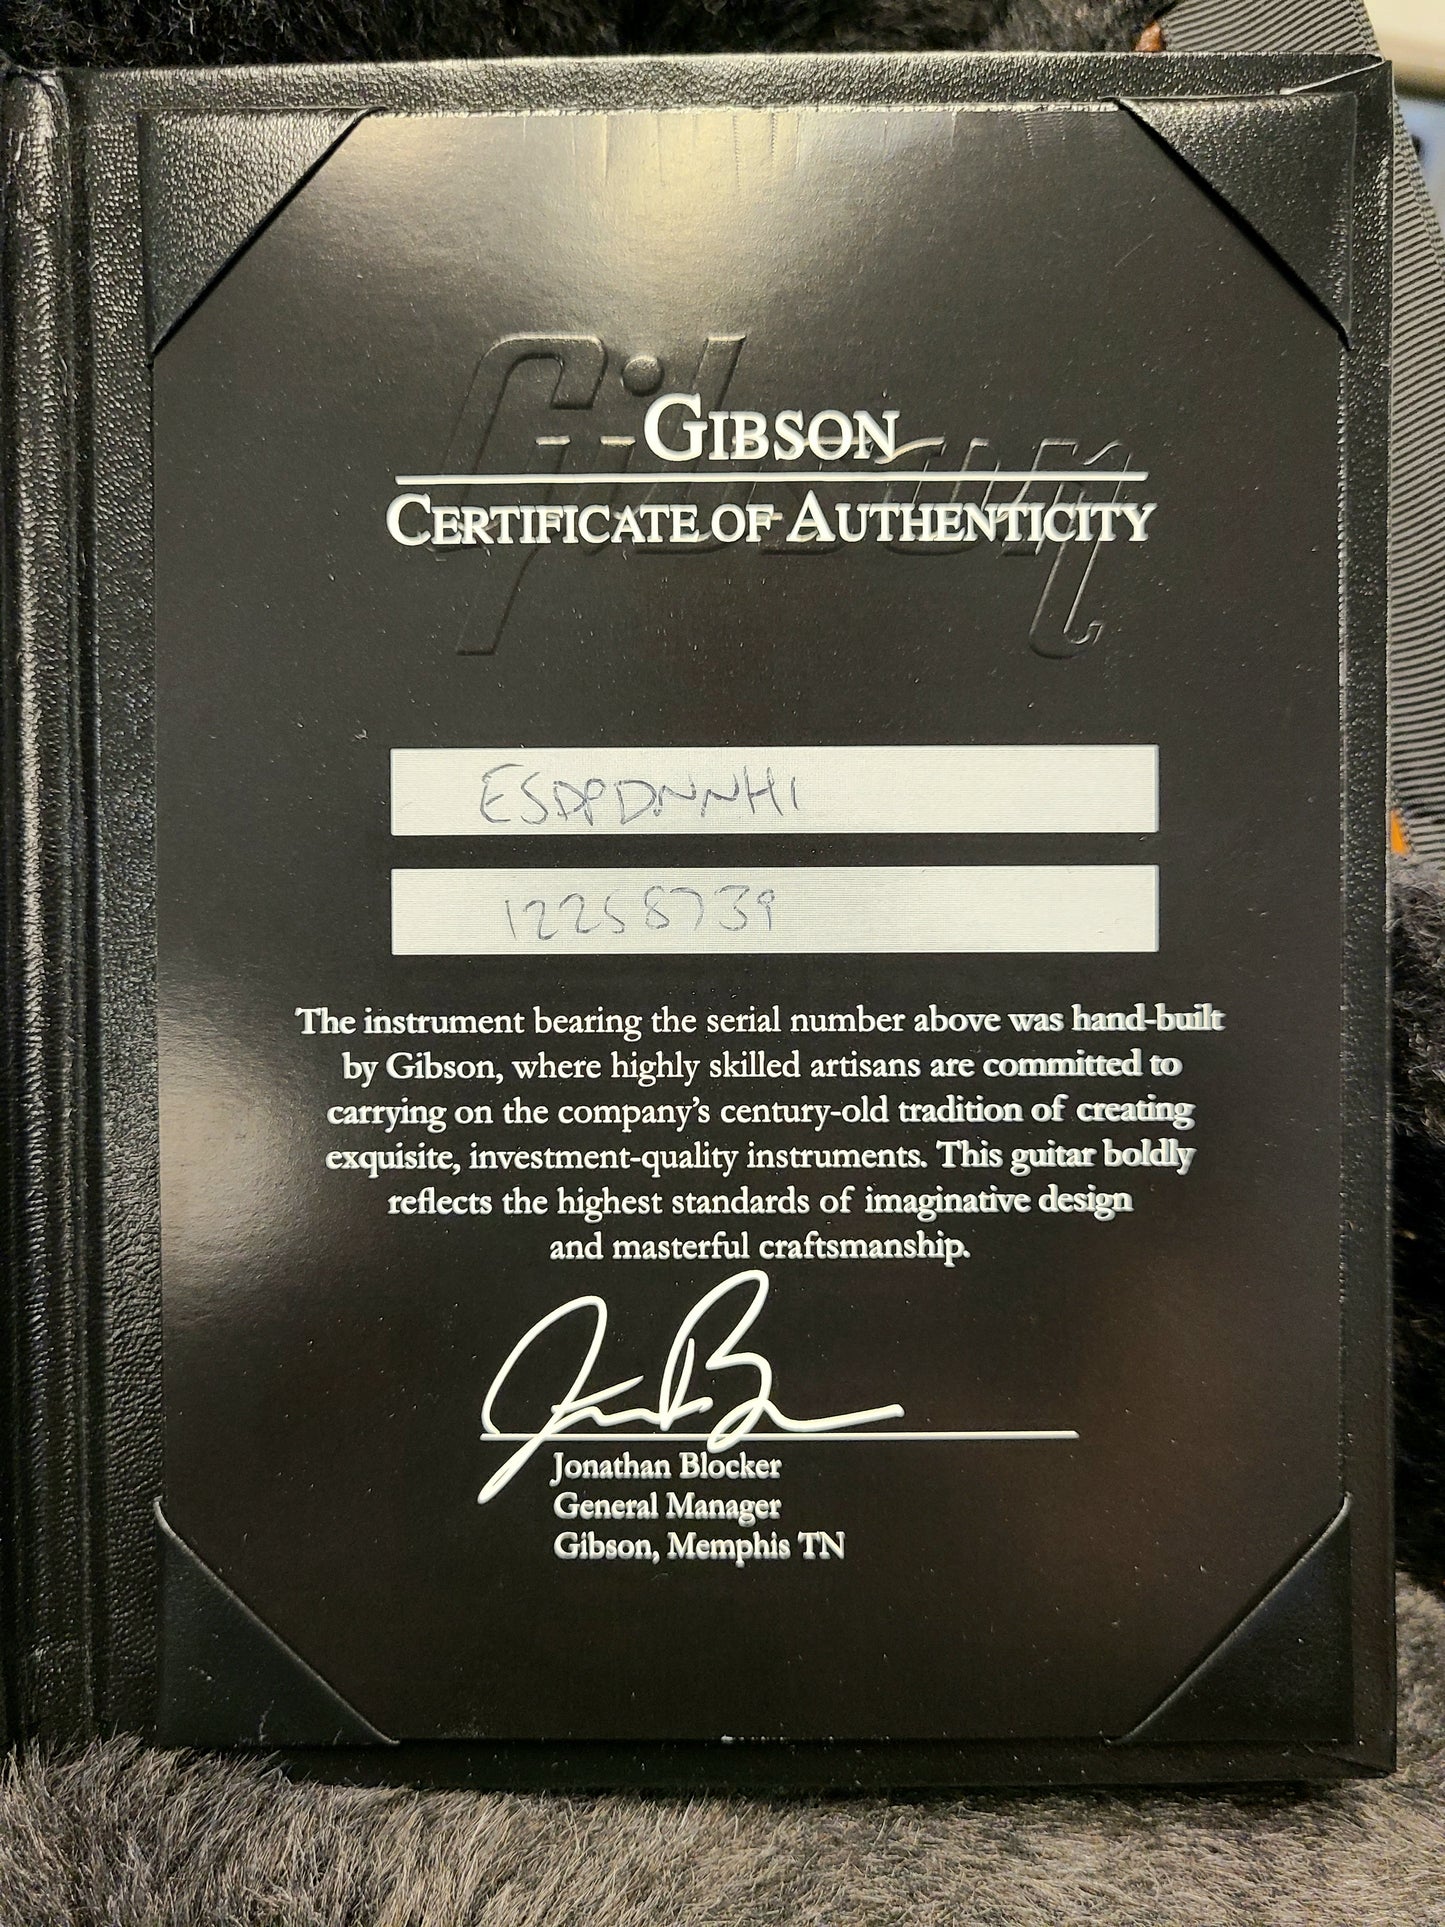 USED Gibson USA ES-335 Semi-Hollow Memphis 2019